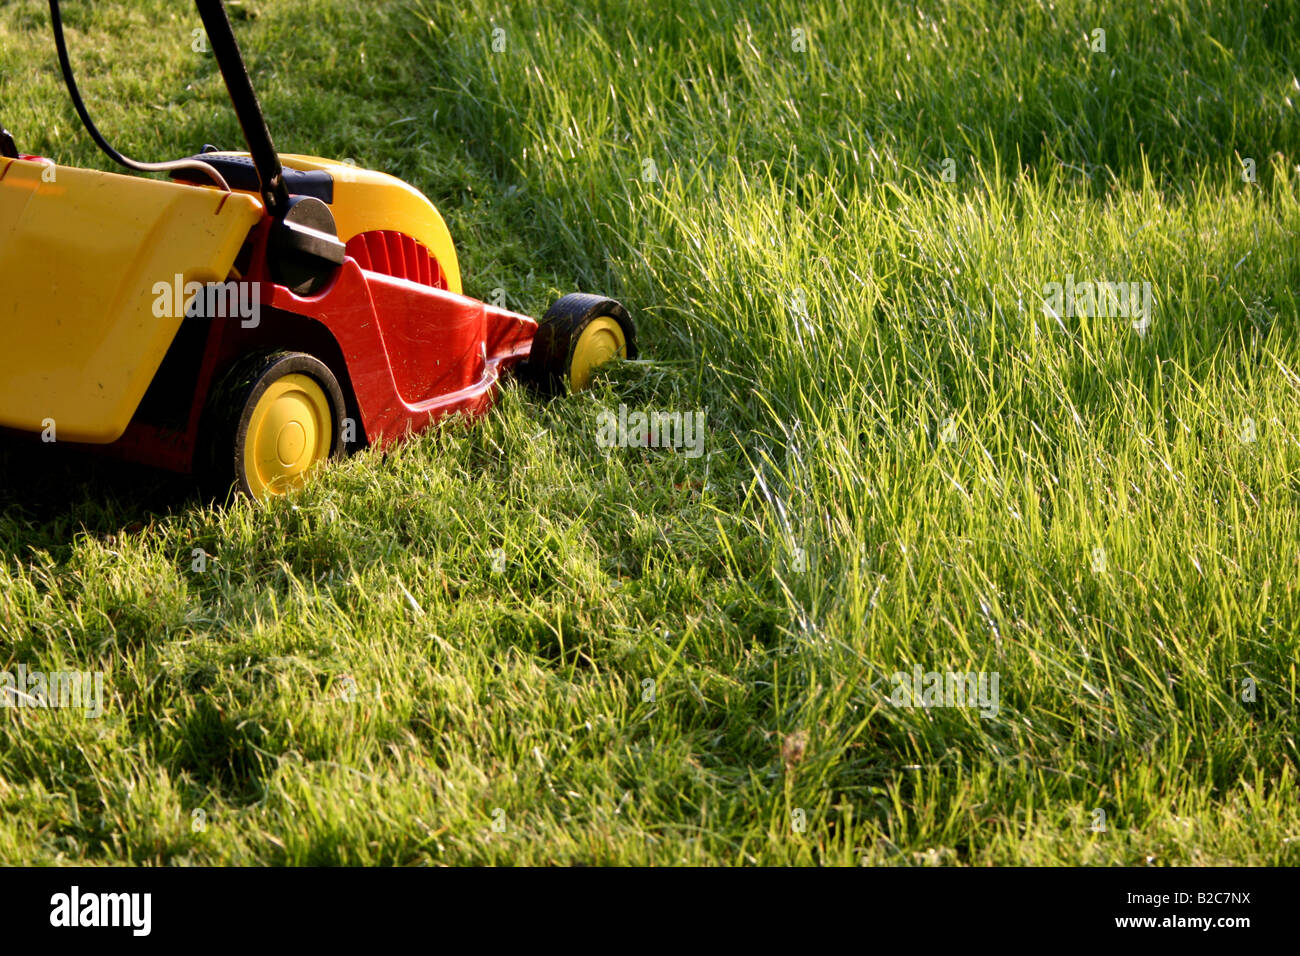 Lawn mower in a garden Stock Photo